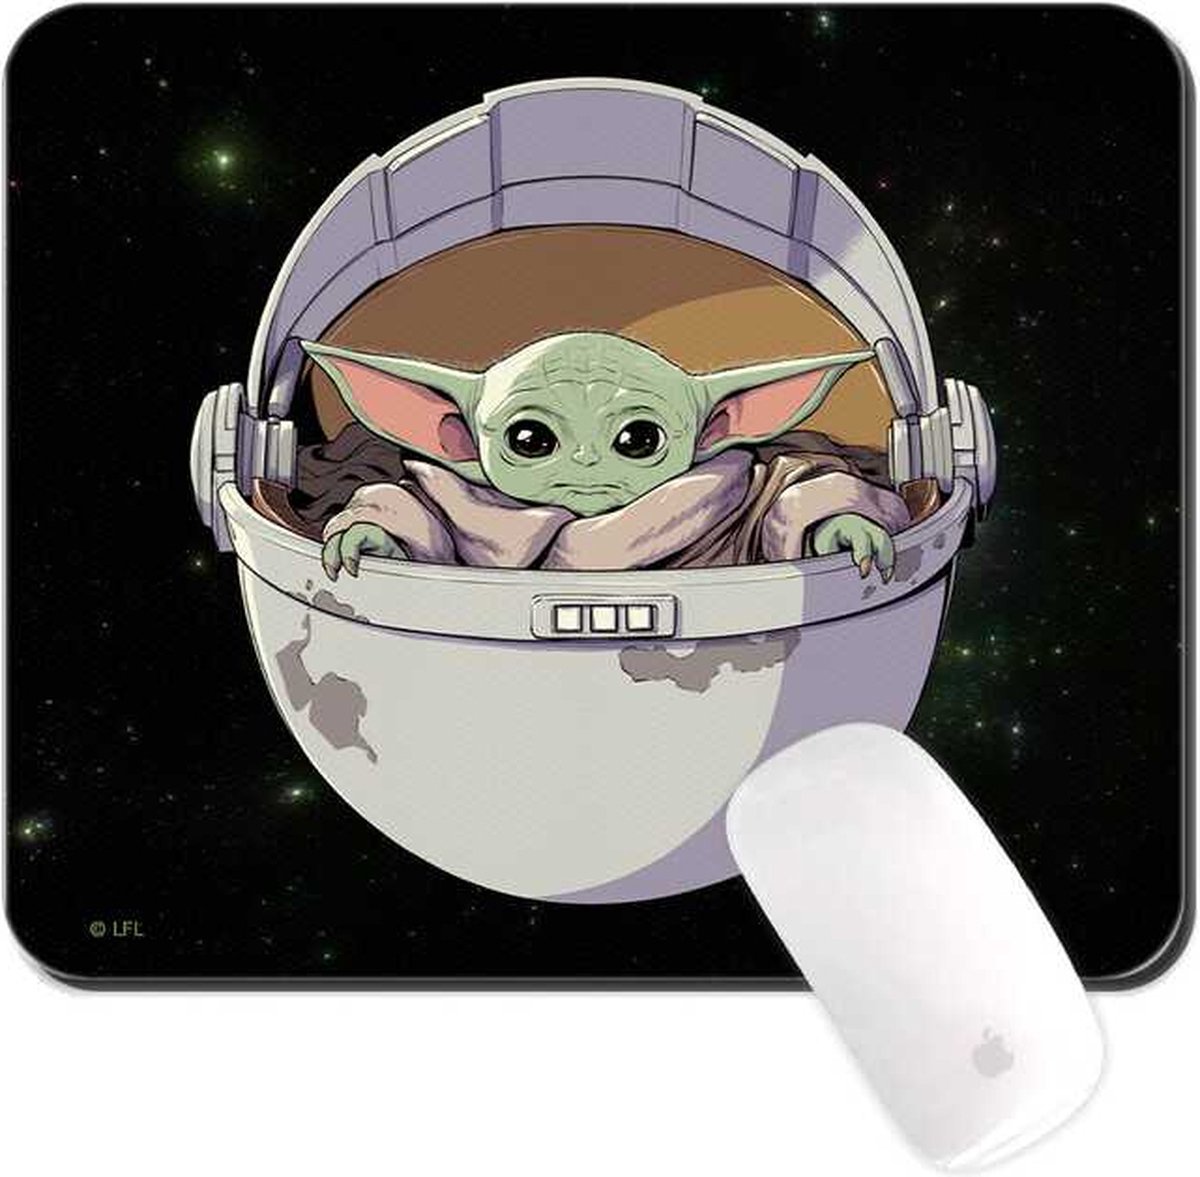 Disney Star Wars Baby Yoda - Muismat 22x18cm 3mm dik